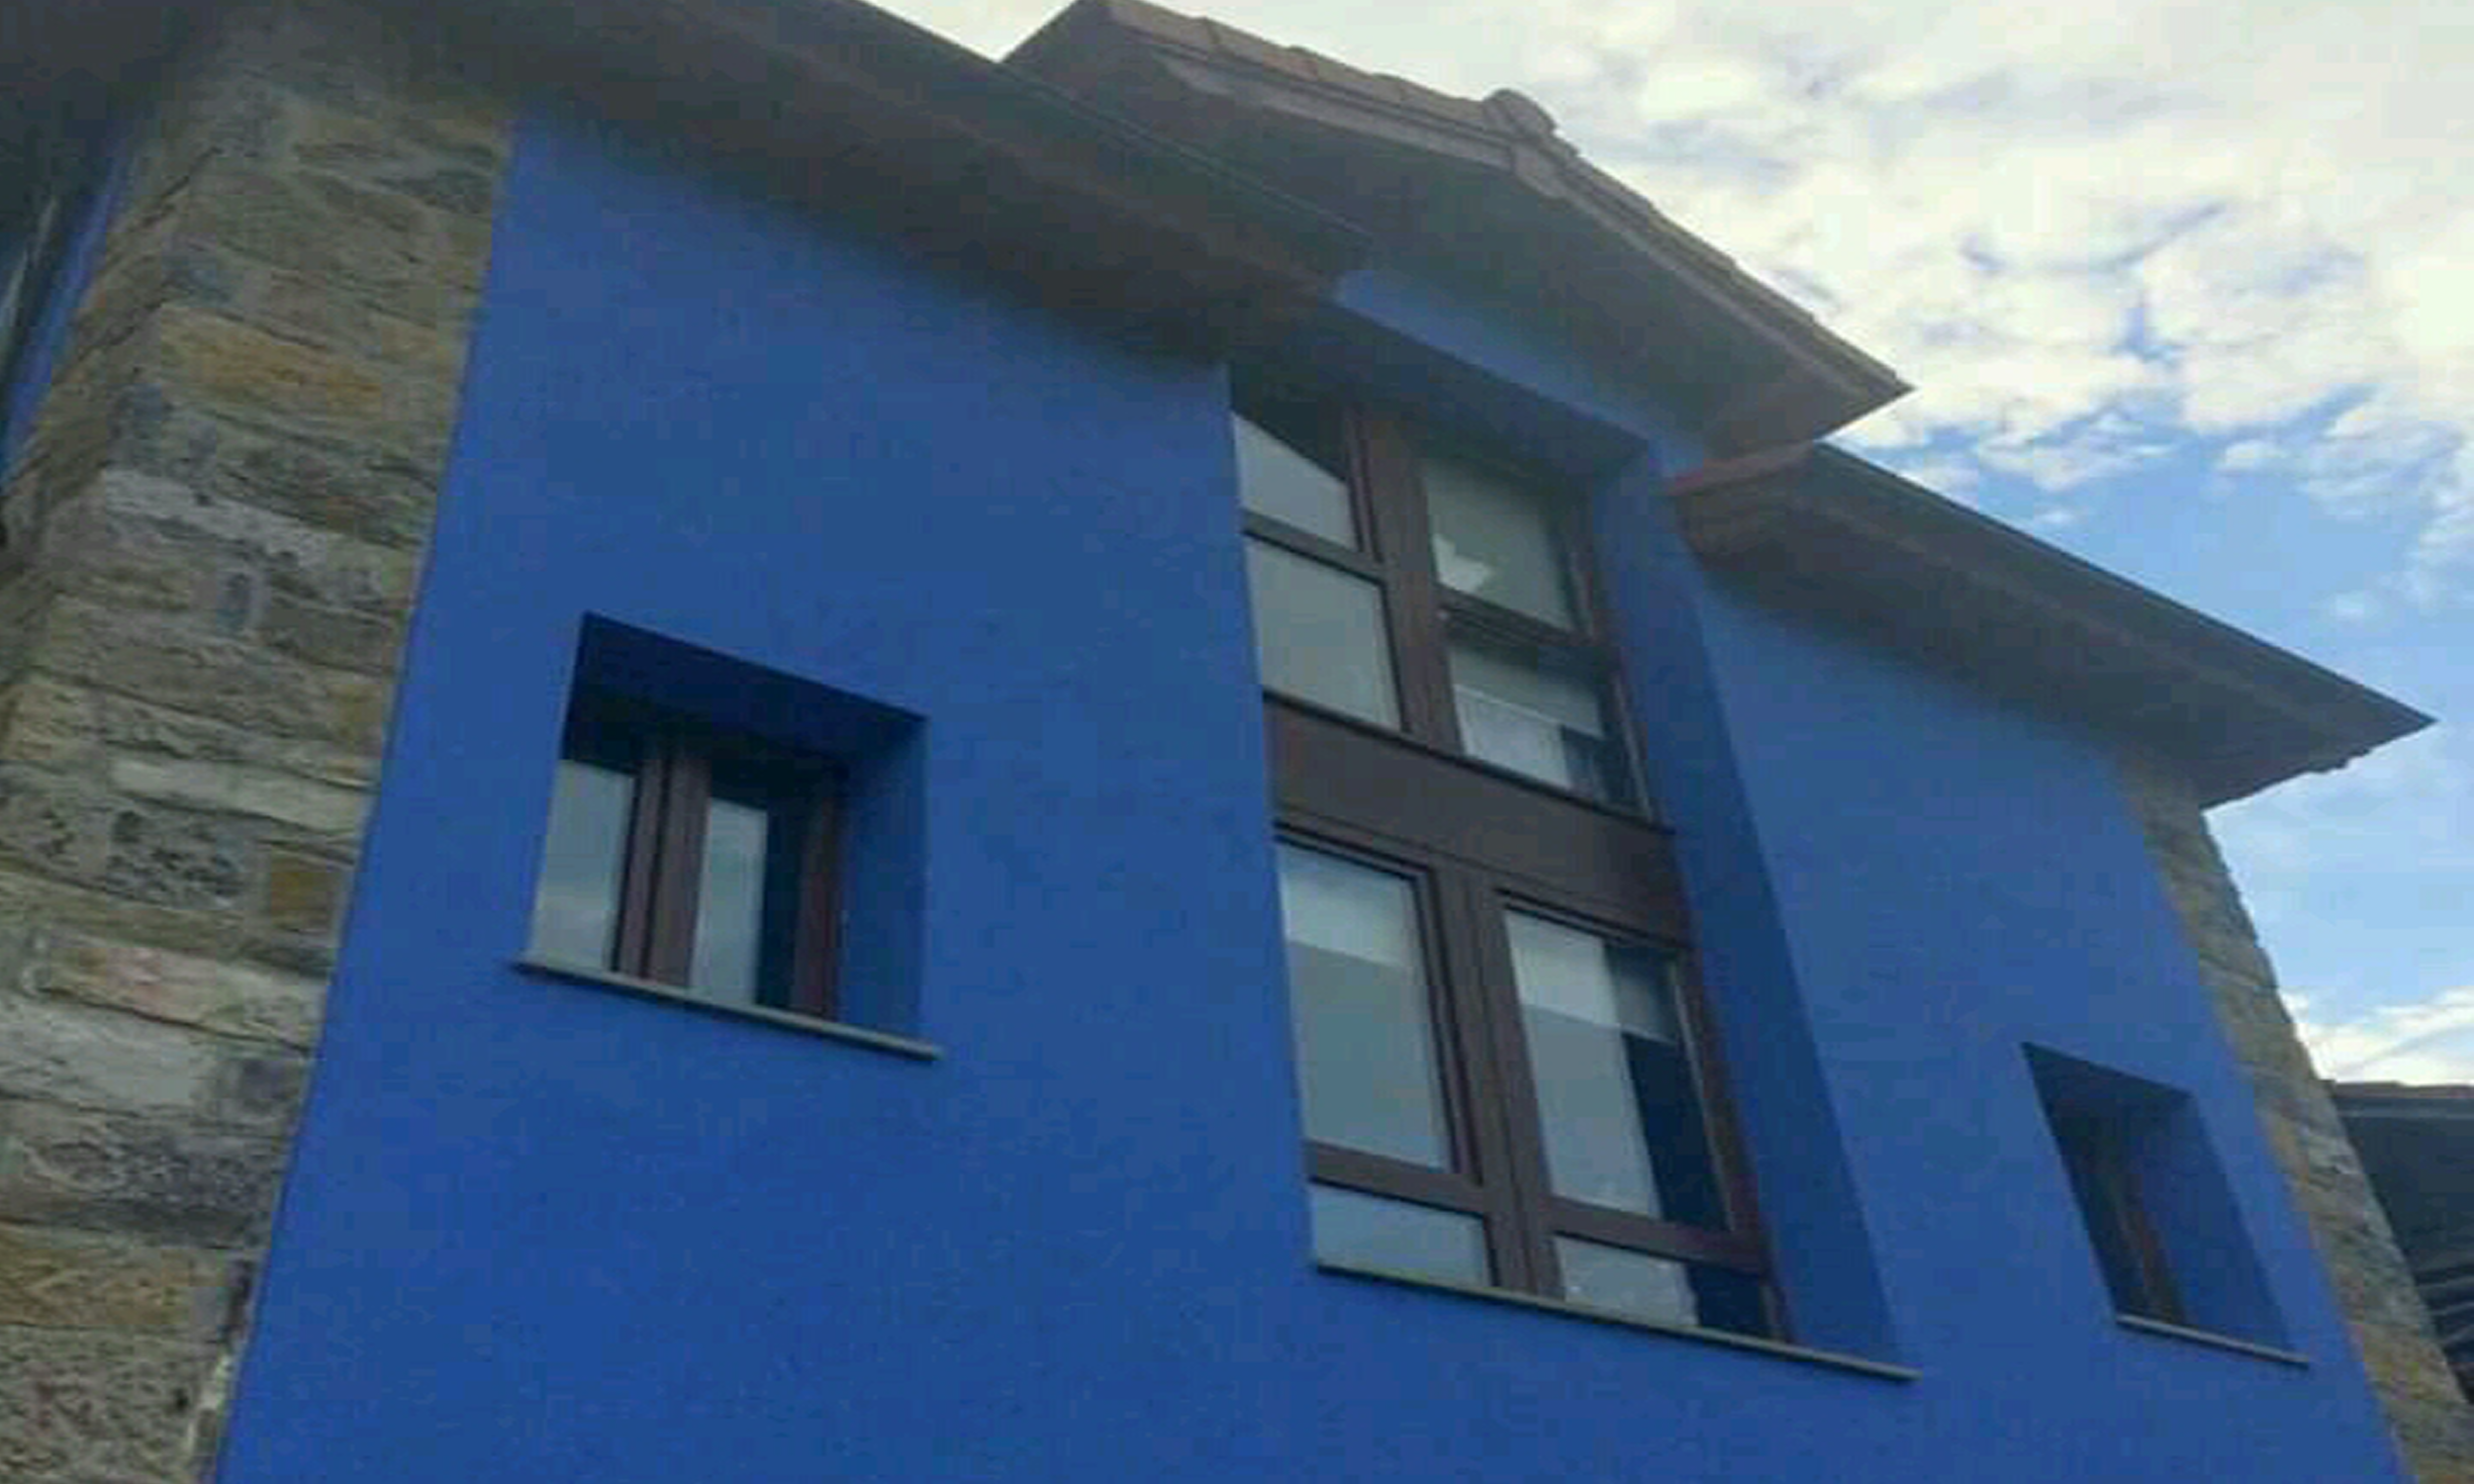 obra-fachada-azul-ventanas-marrón